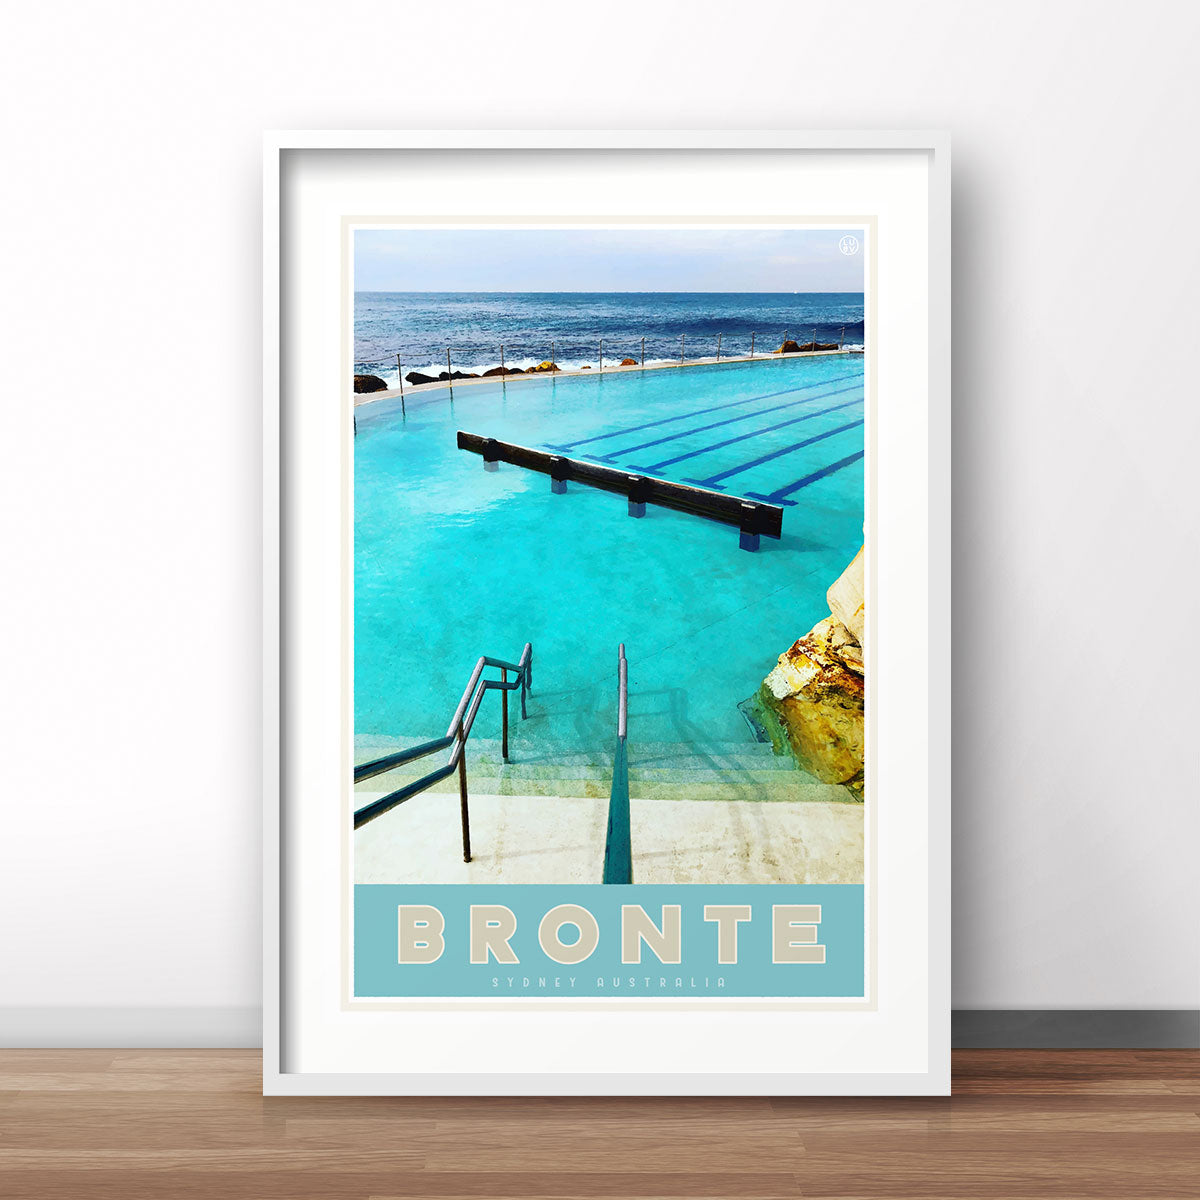 Bronte blue pool vintage travel style print by places we luv